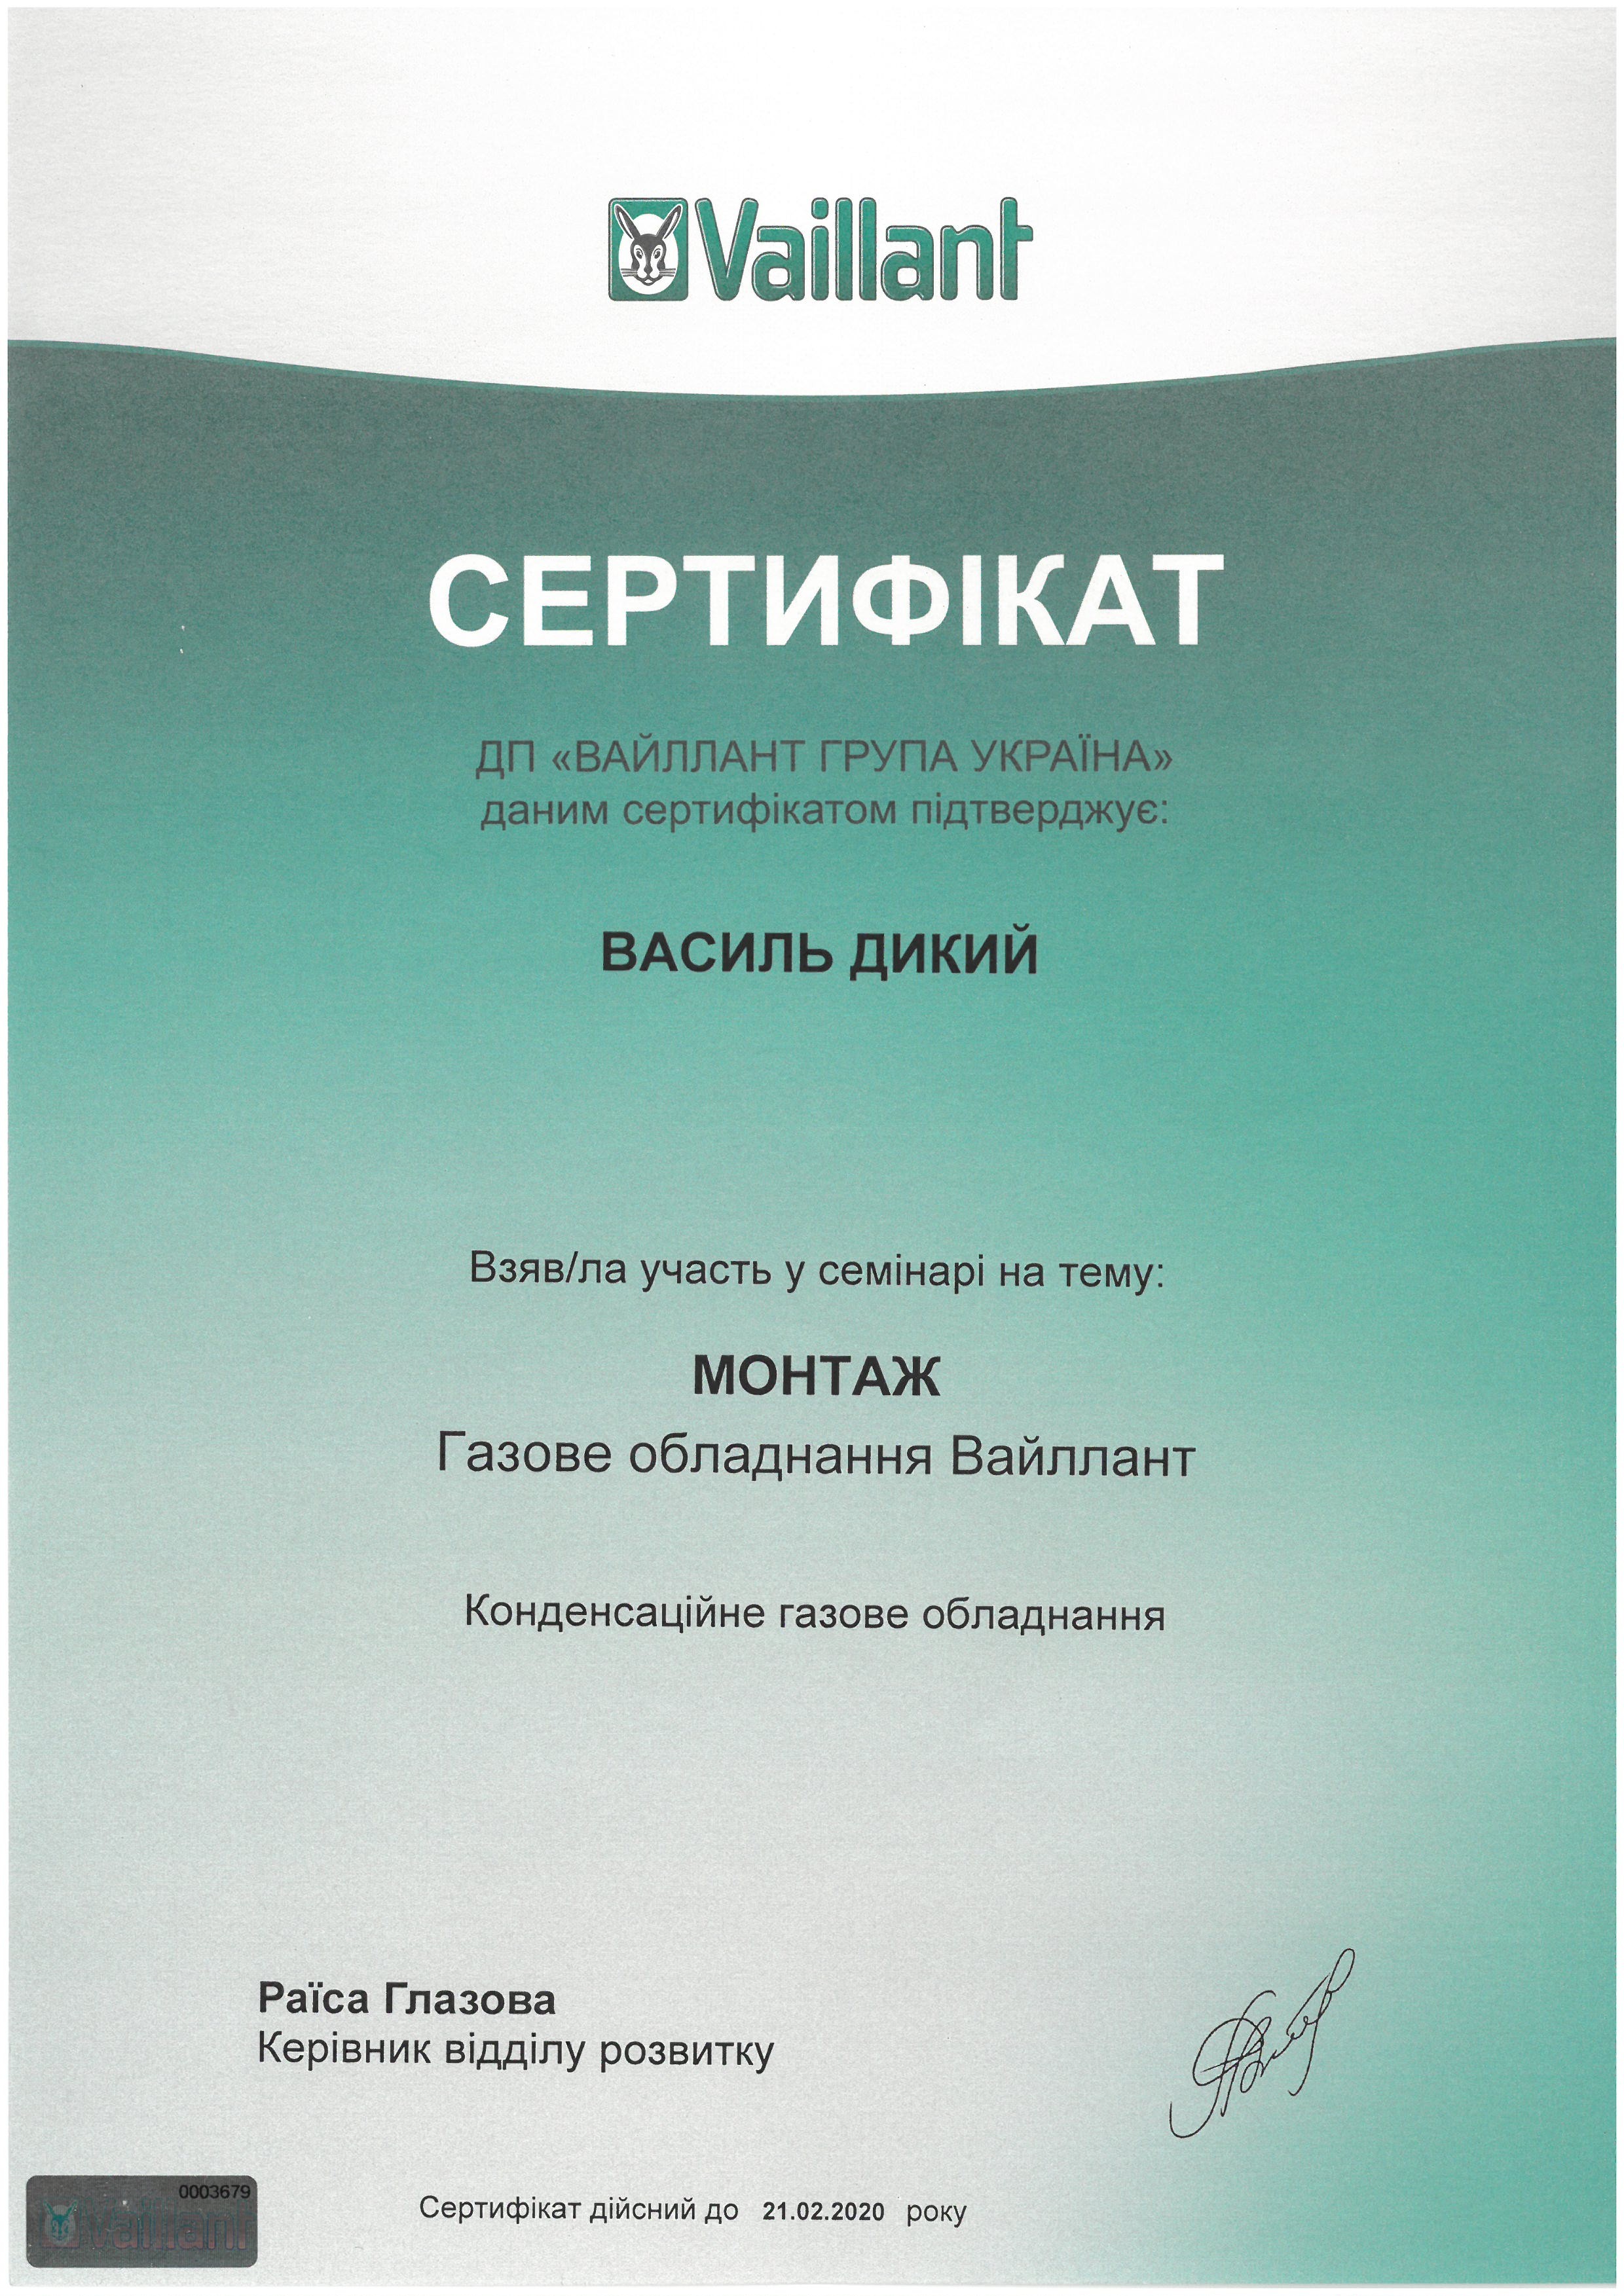 Сертификат Vaillant, монтаж - Сервисный центр KOTLOV - Ирпень